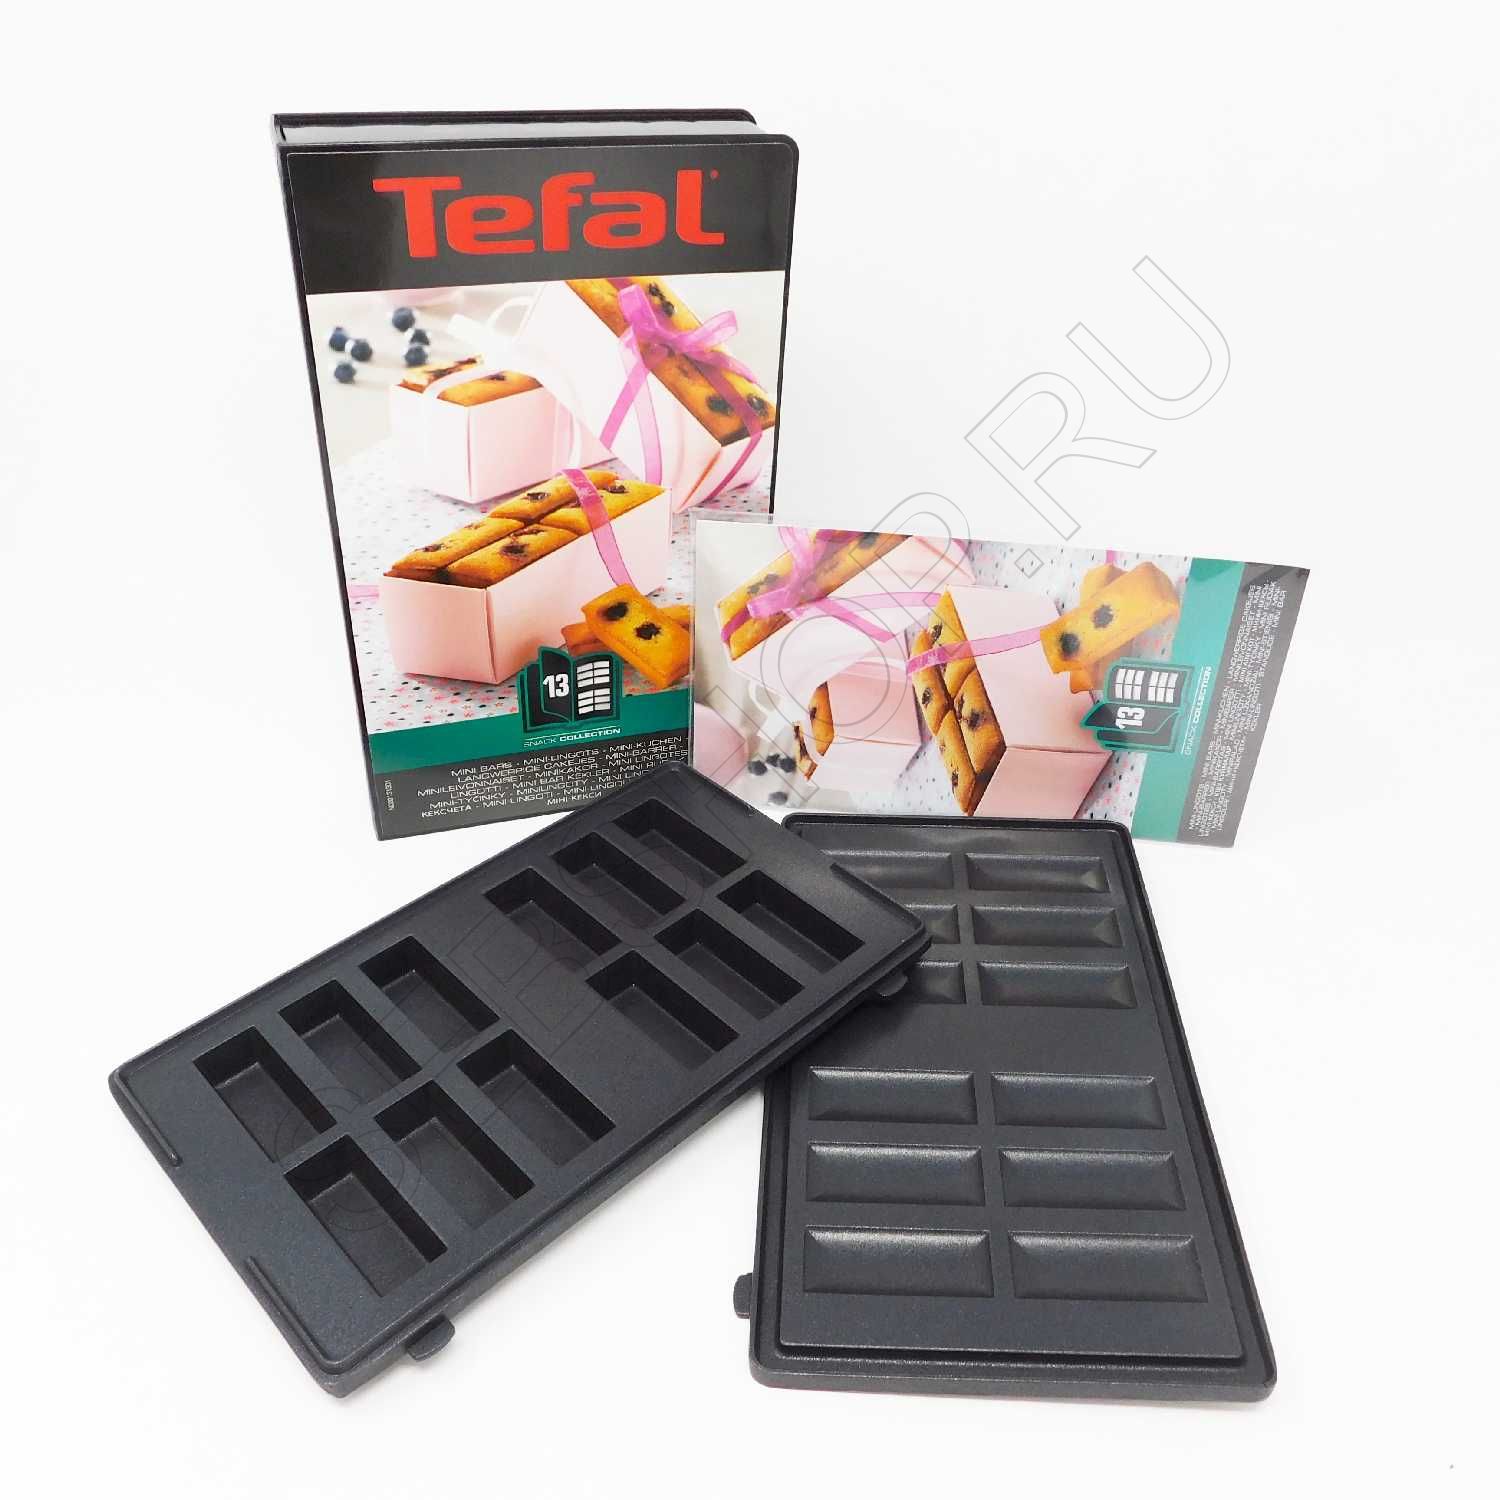 Tefal XA801312 Snack Collection - Box 13: Mini bars